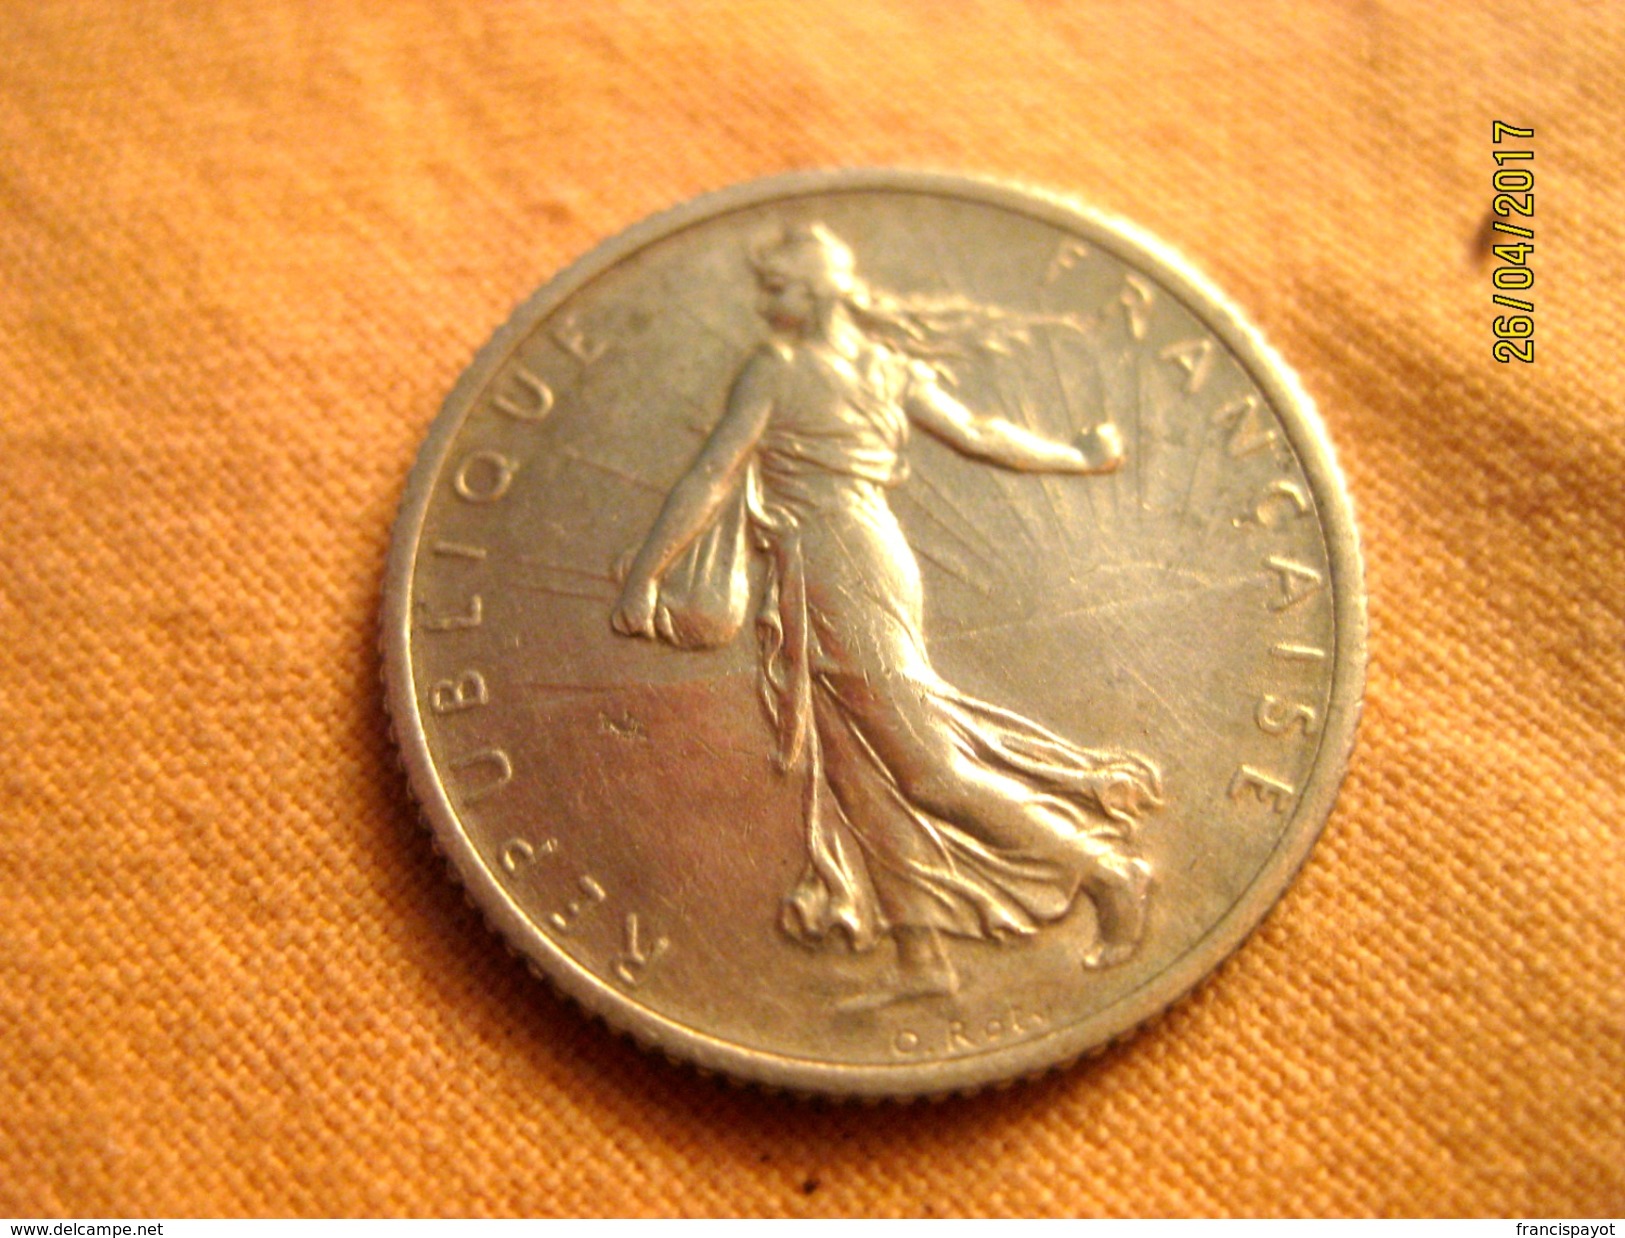 France 1 Franc 1917 (silver) - 1 Franc